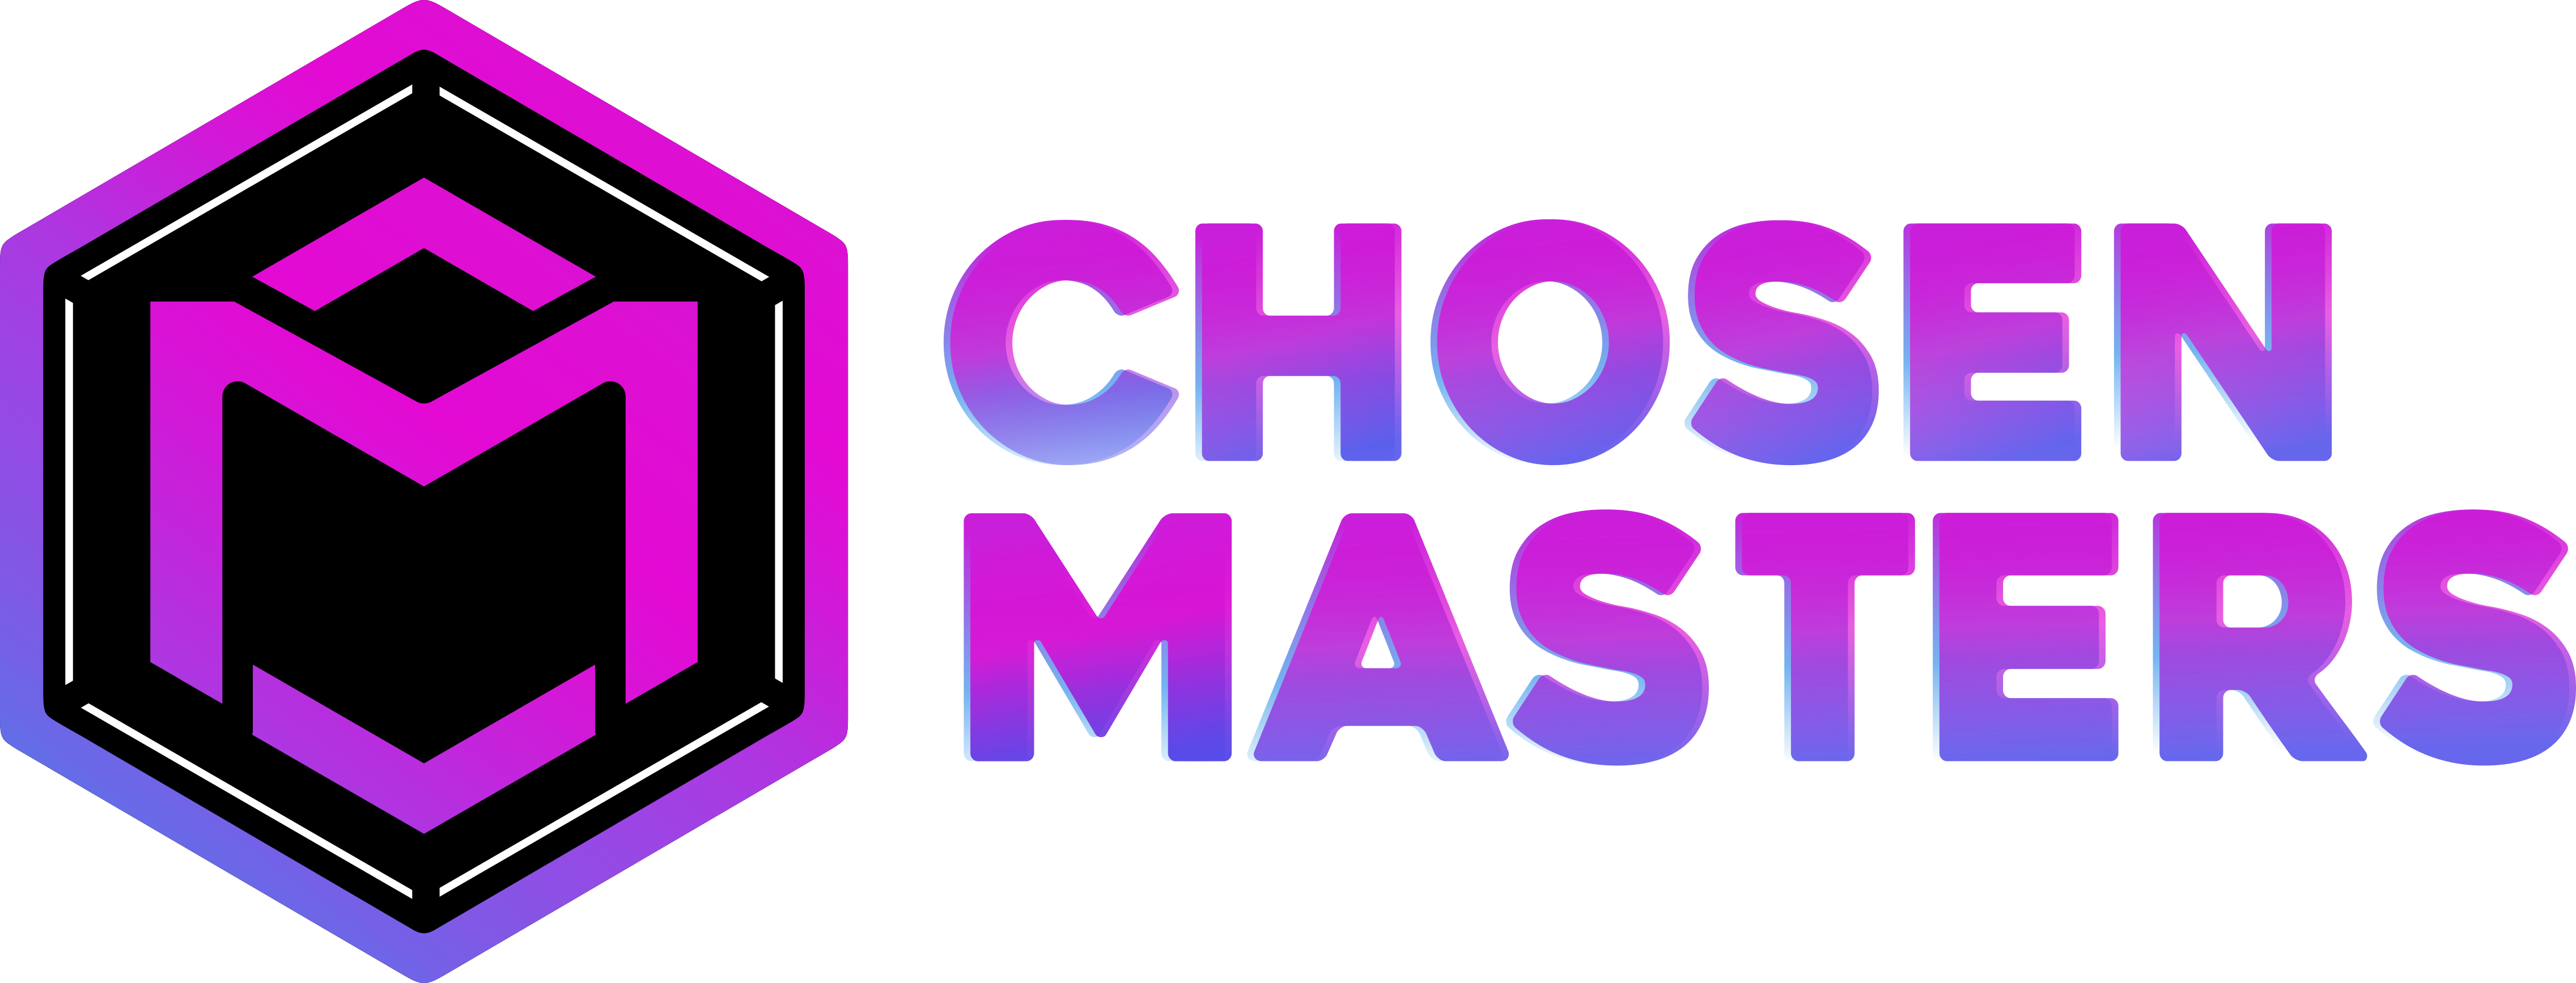 Chosen Masters logo full